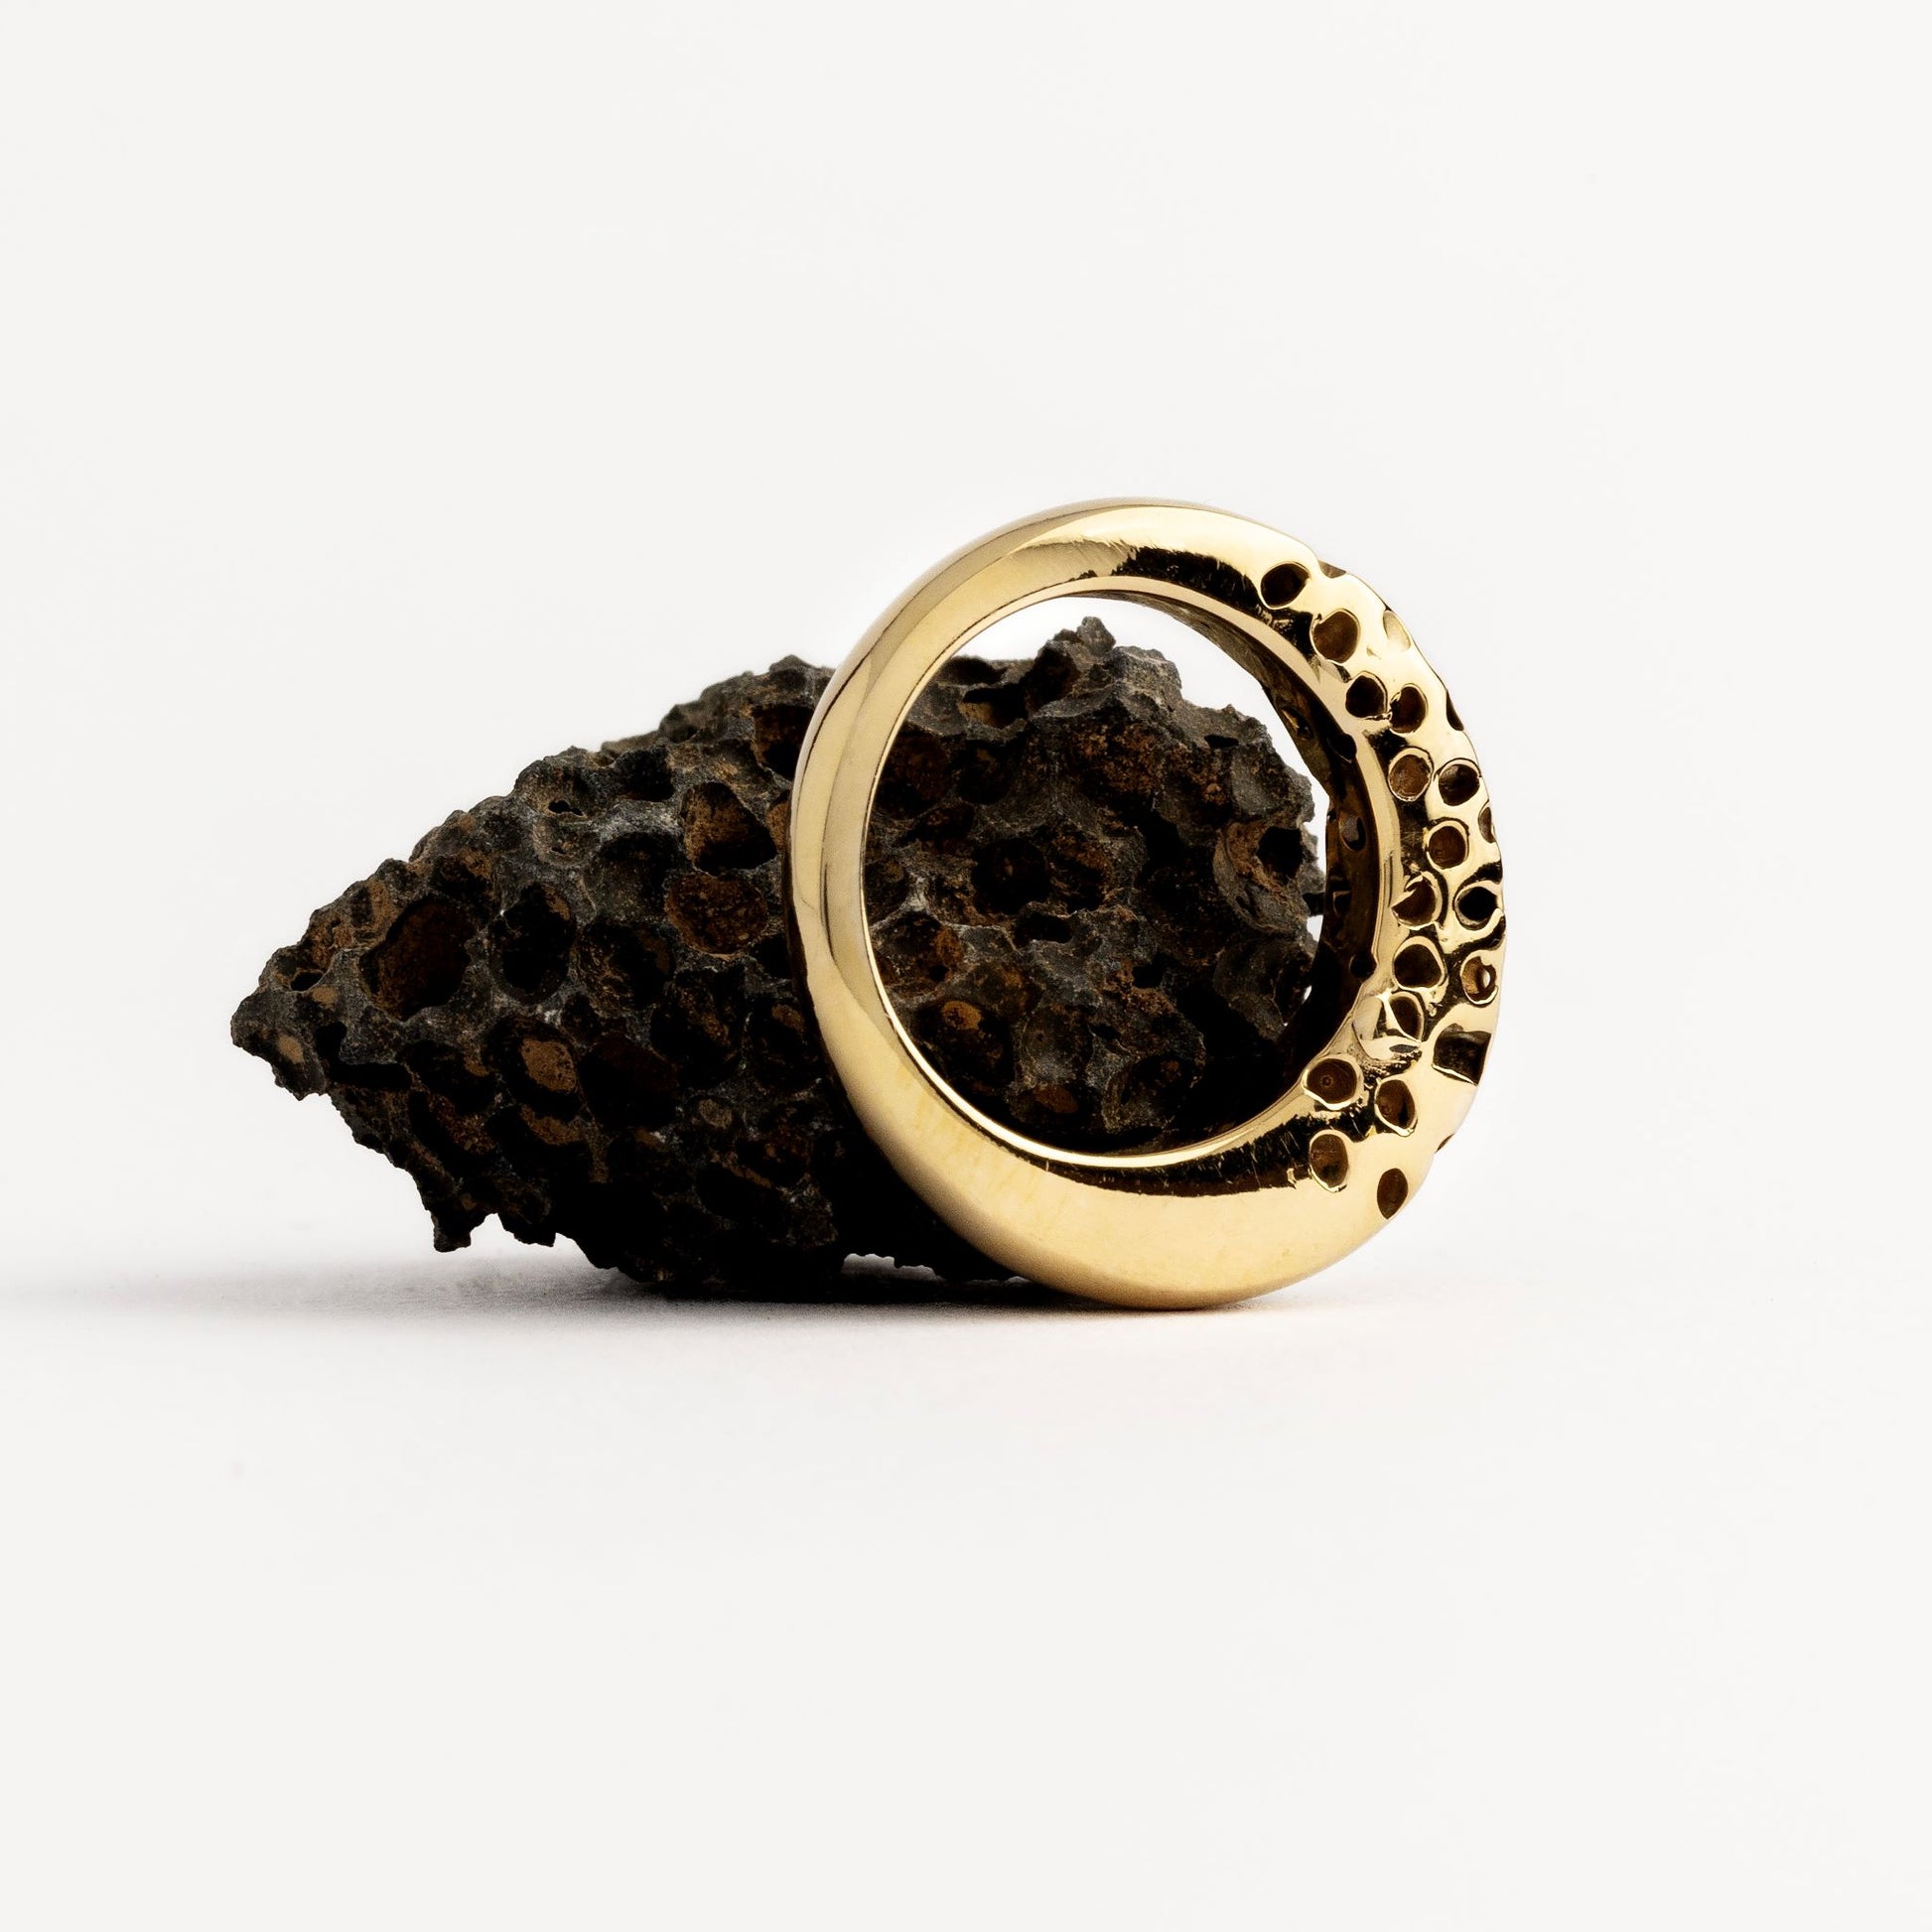 bronze ring handmade by ester studio photo by stefania meli